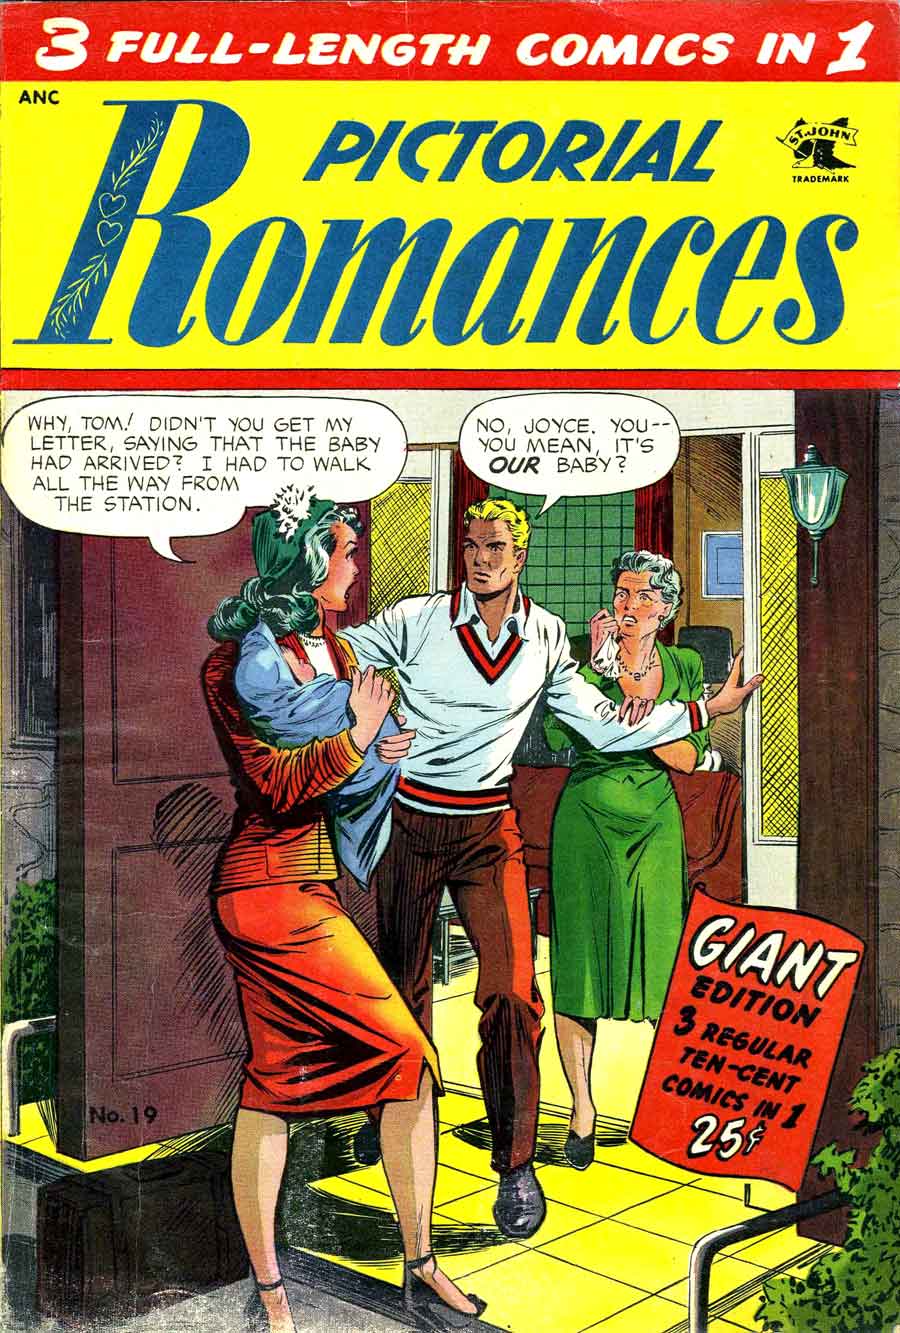 Pictorial Romances #19 st. john golden age 1950s romance comic book cover art by Matt Baker